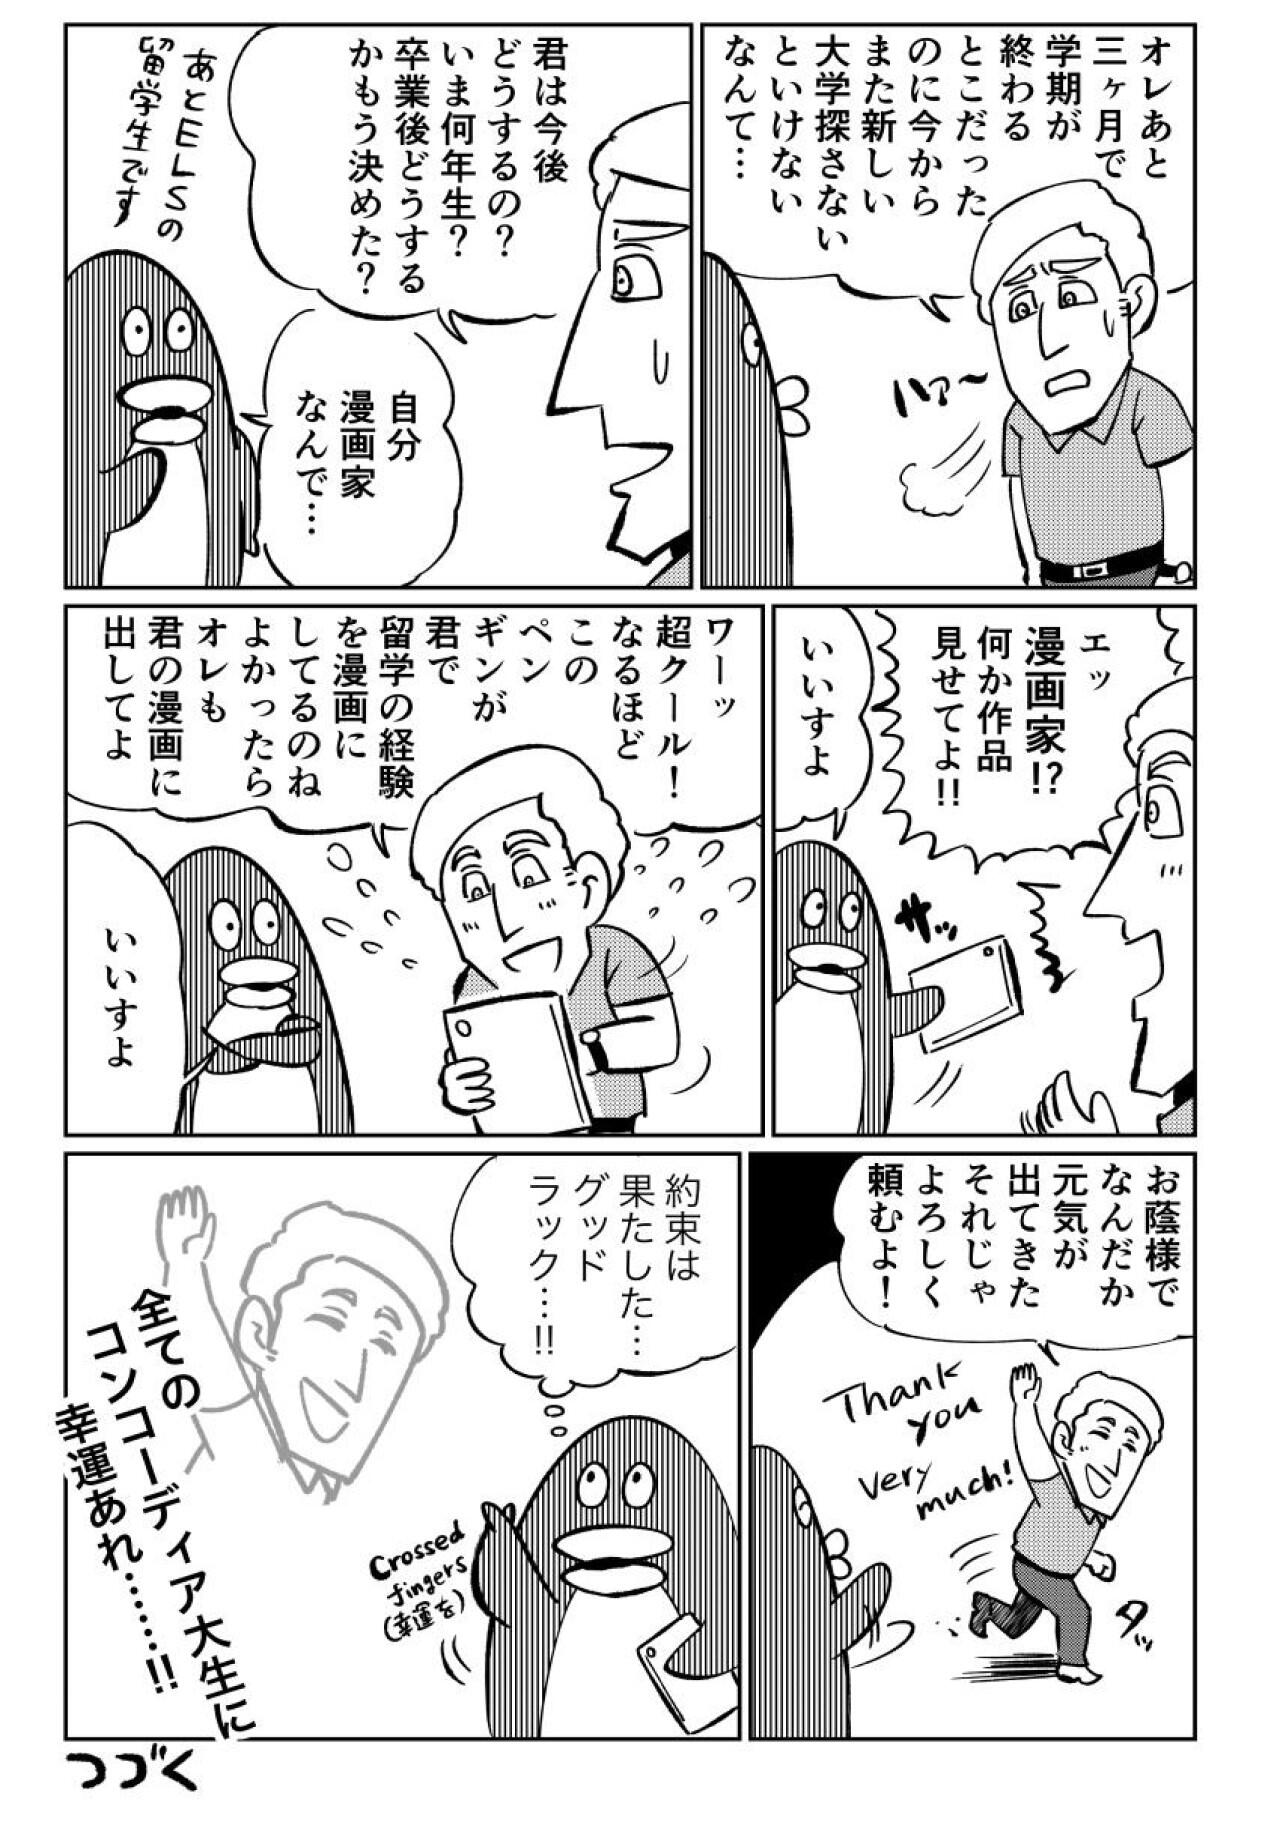 https://www.ryugaku.co.jp/column/images/34sai12_4_1280.jpg